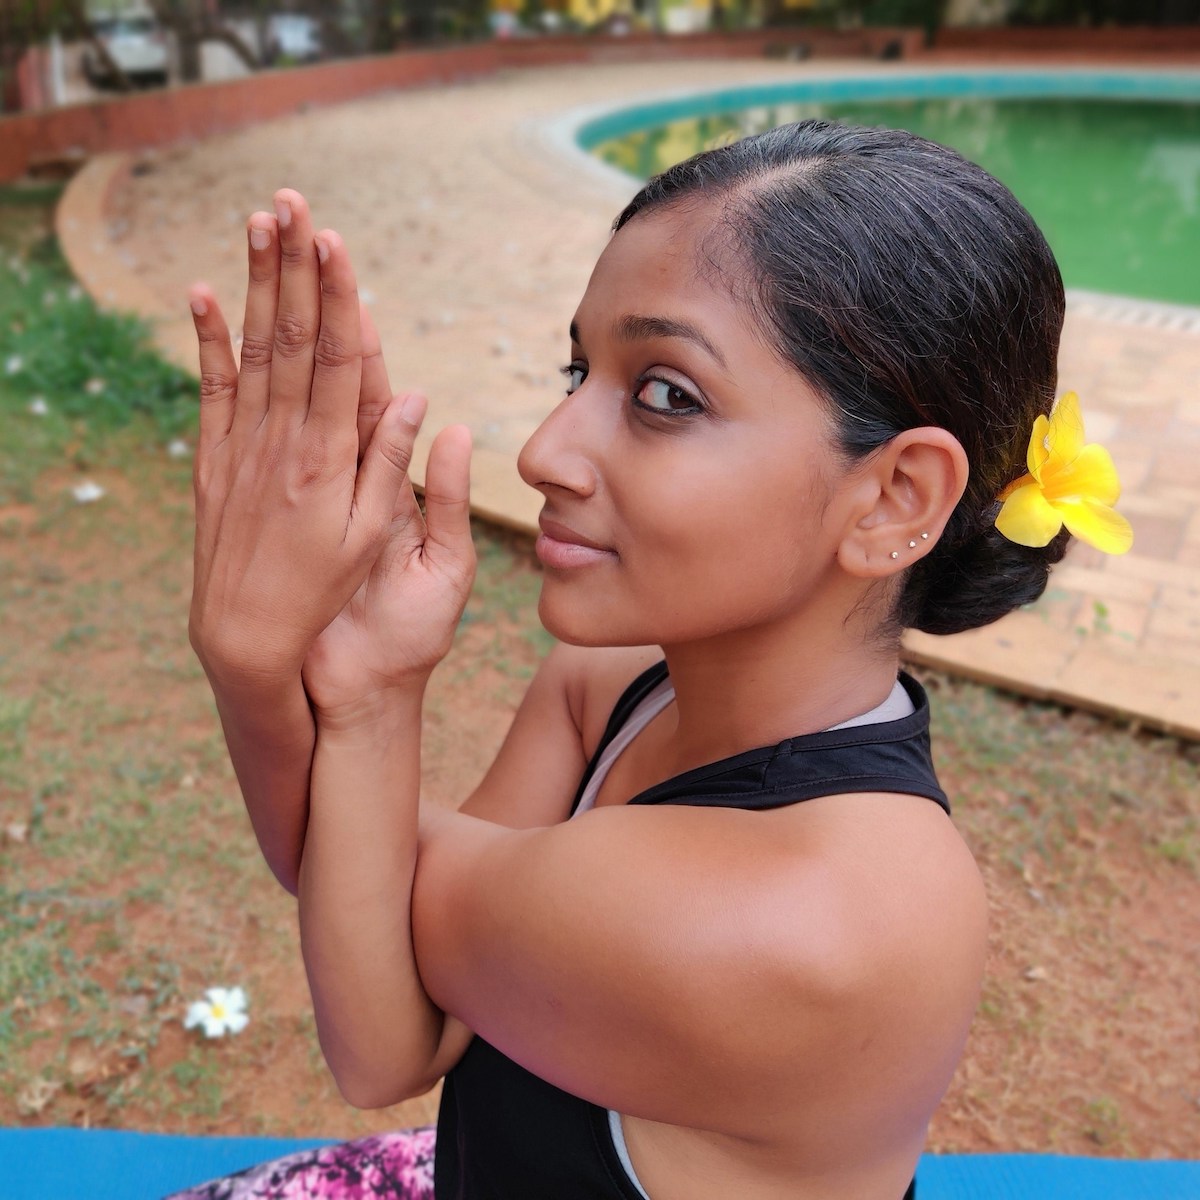 Yoga and veganism with Rashmi Ramesh